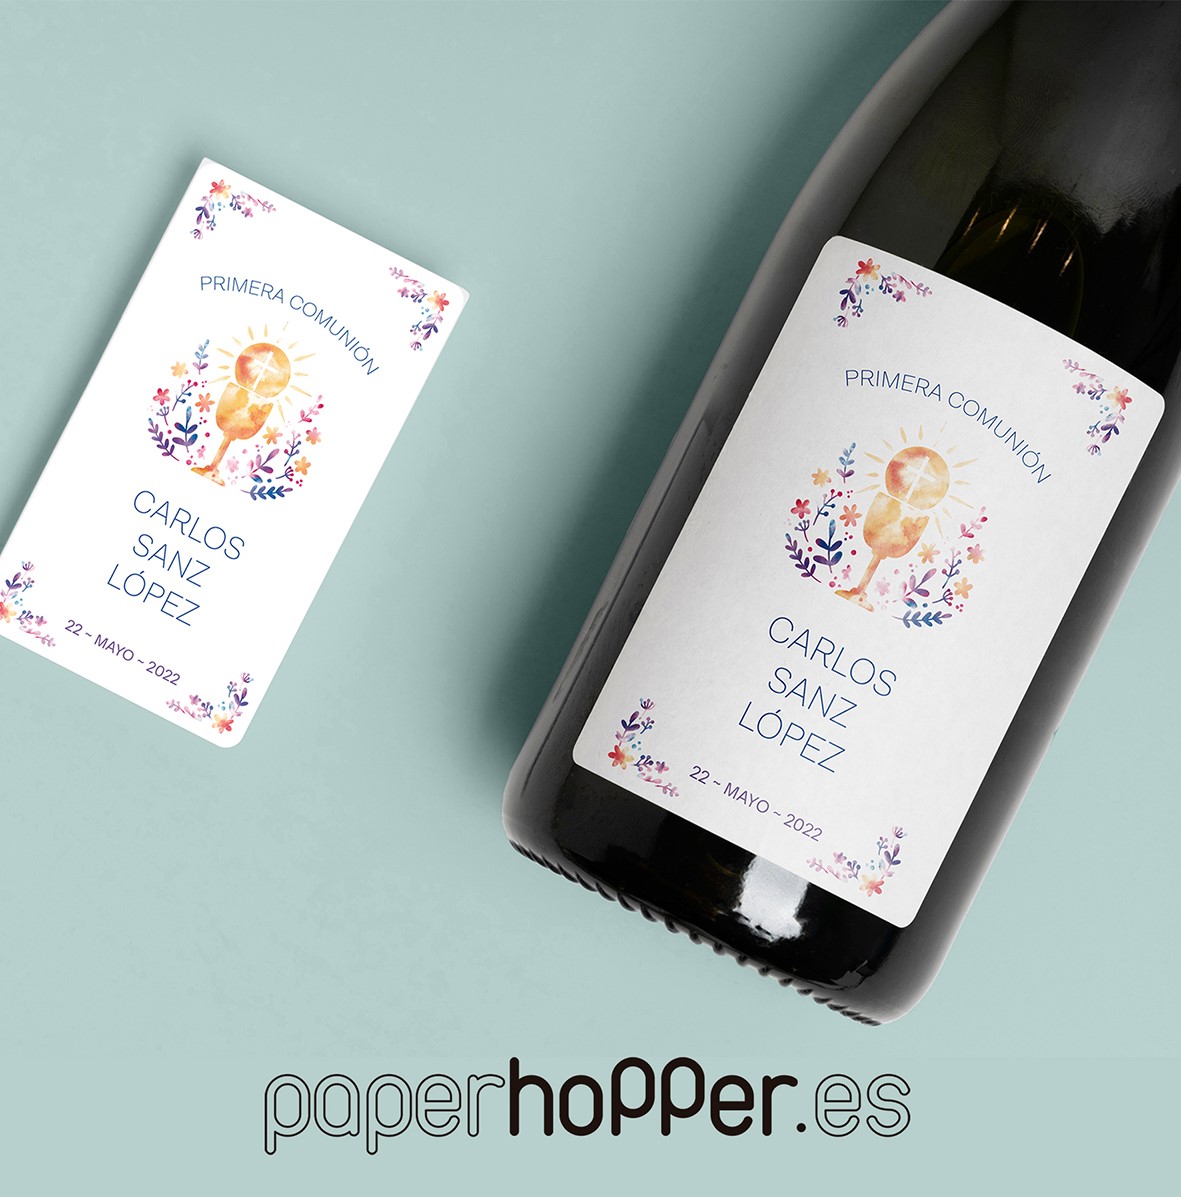 Etiquetas adhesivas personalizadas Botella Vino Times - Paperhopper